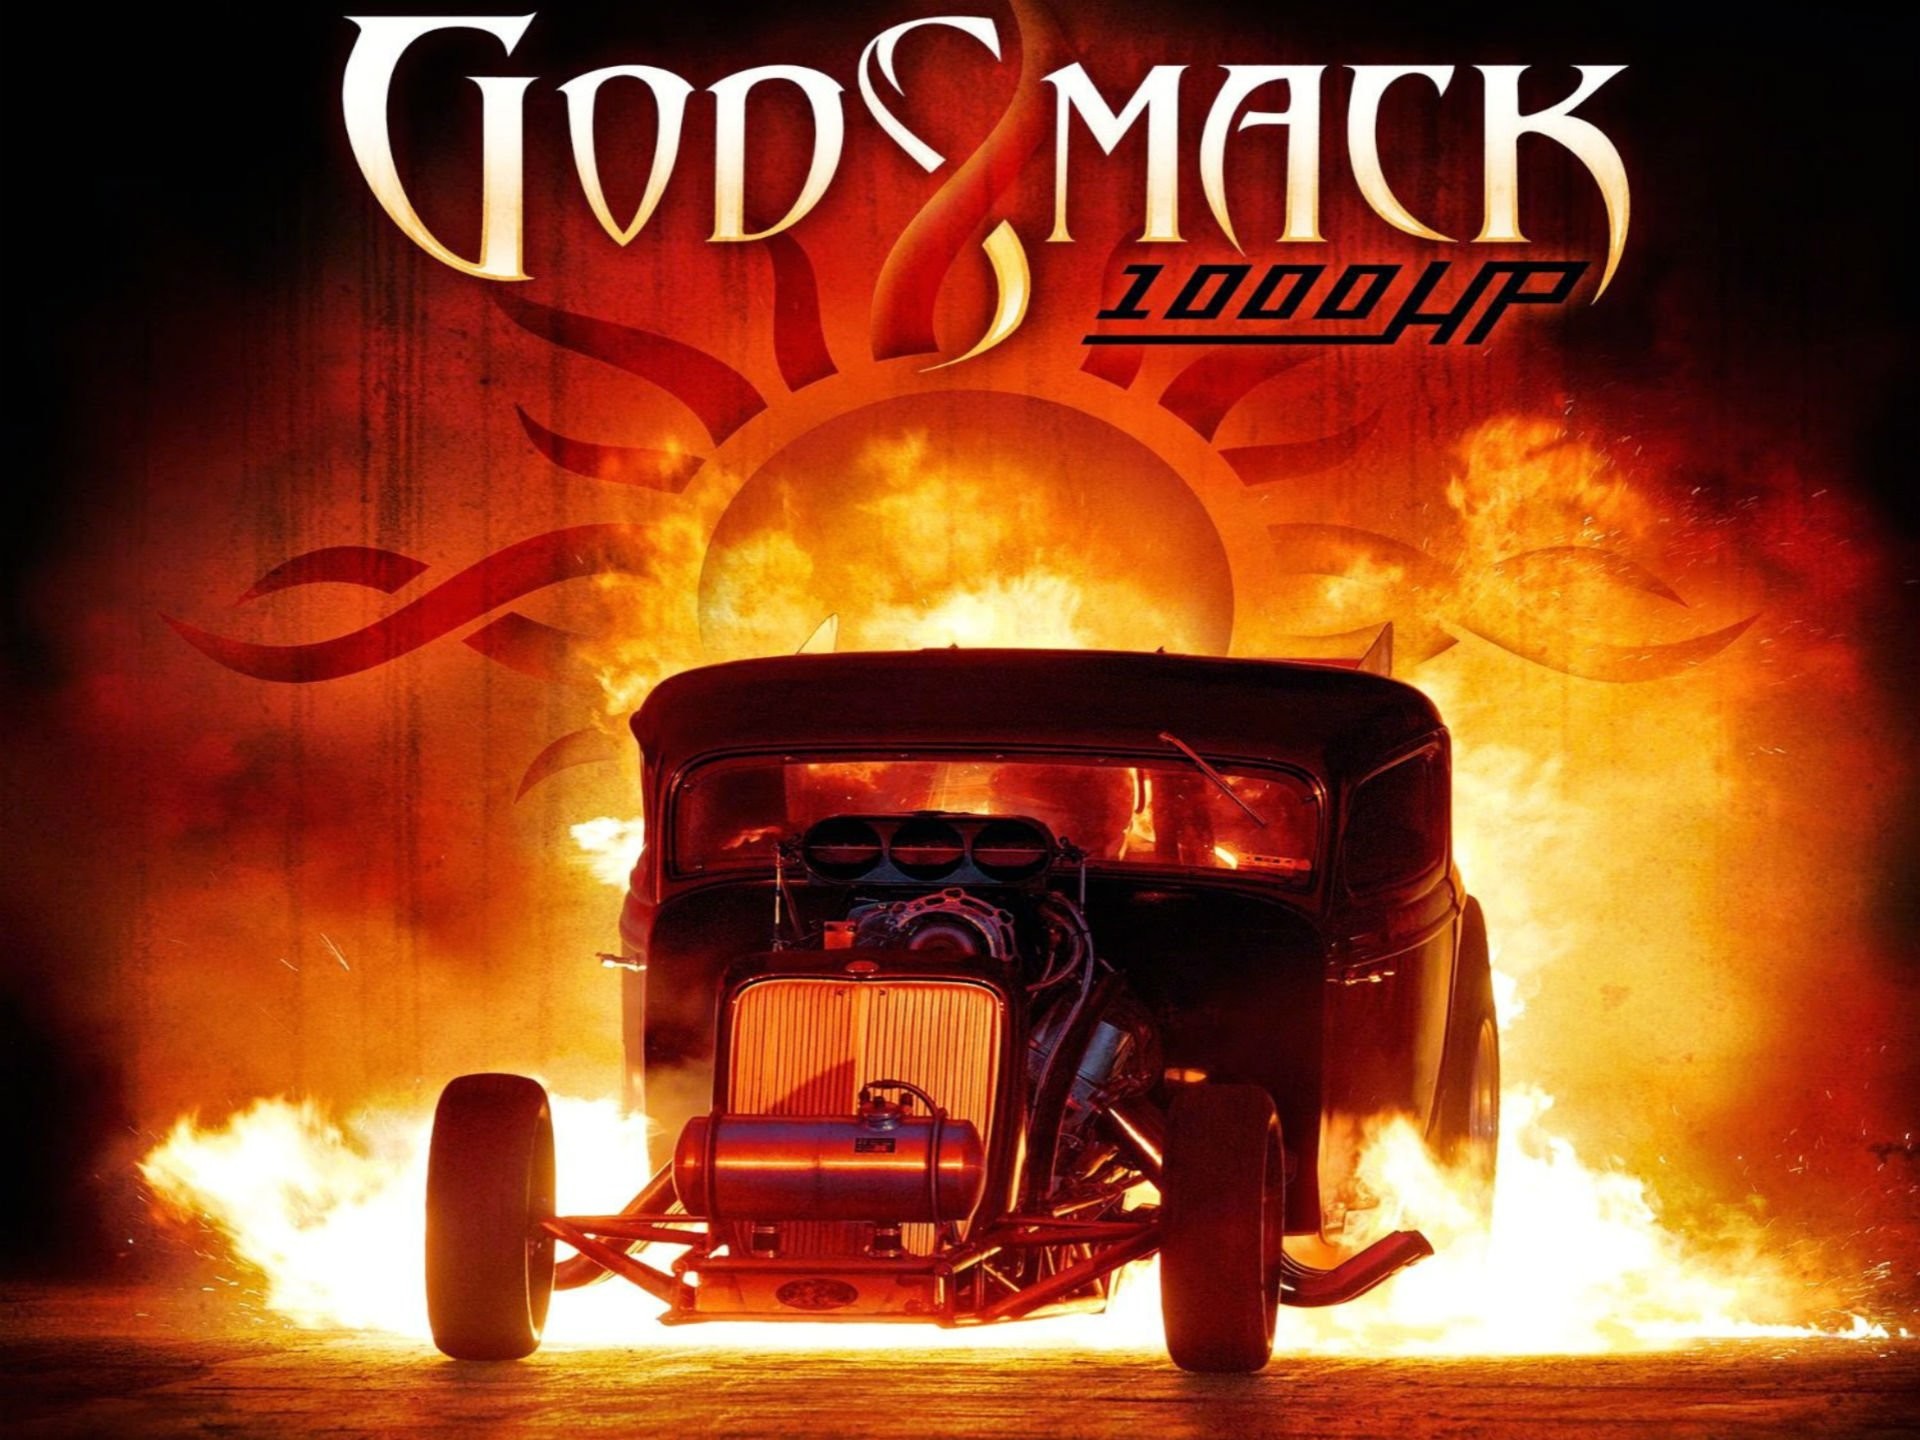 Godsmack Nu Metal Metal Heavy Alternative Hot Rod Rods Fire Wallpaper 1920x1440 506950 Wallpaperup 1920x1440